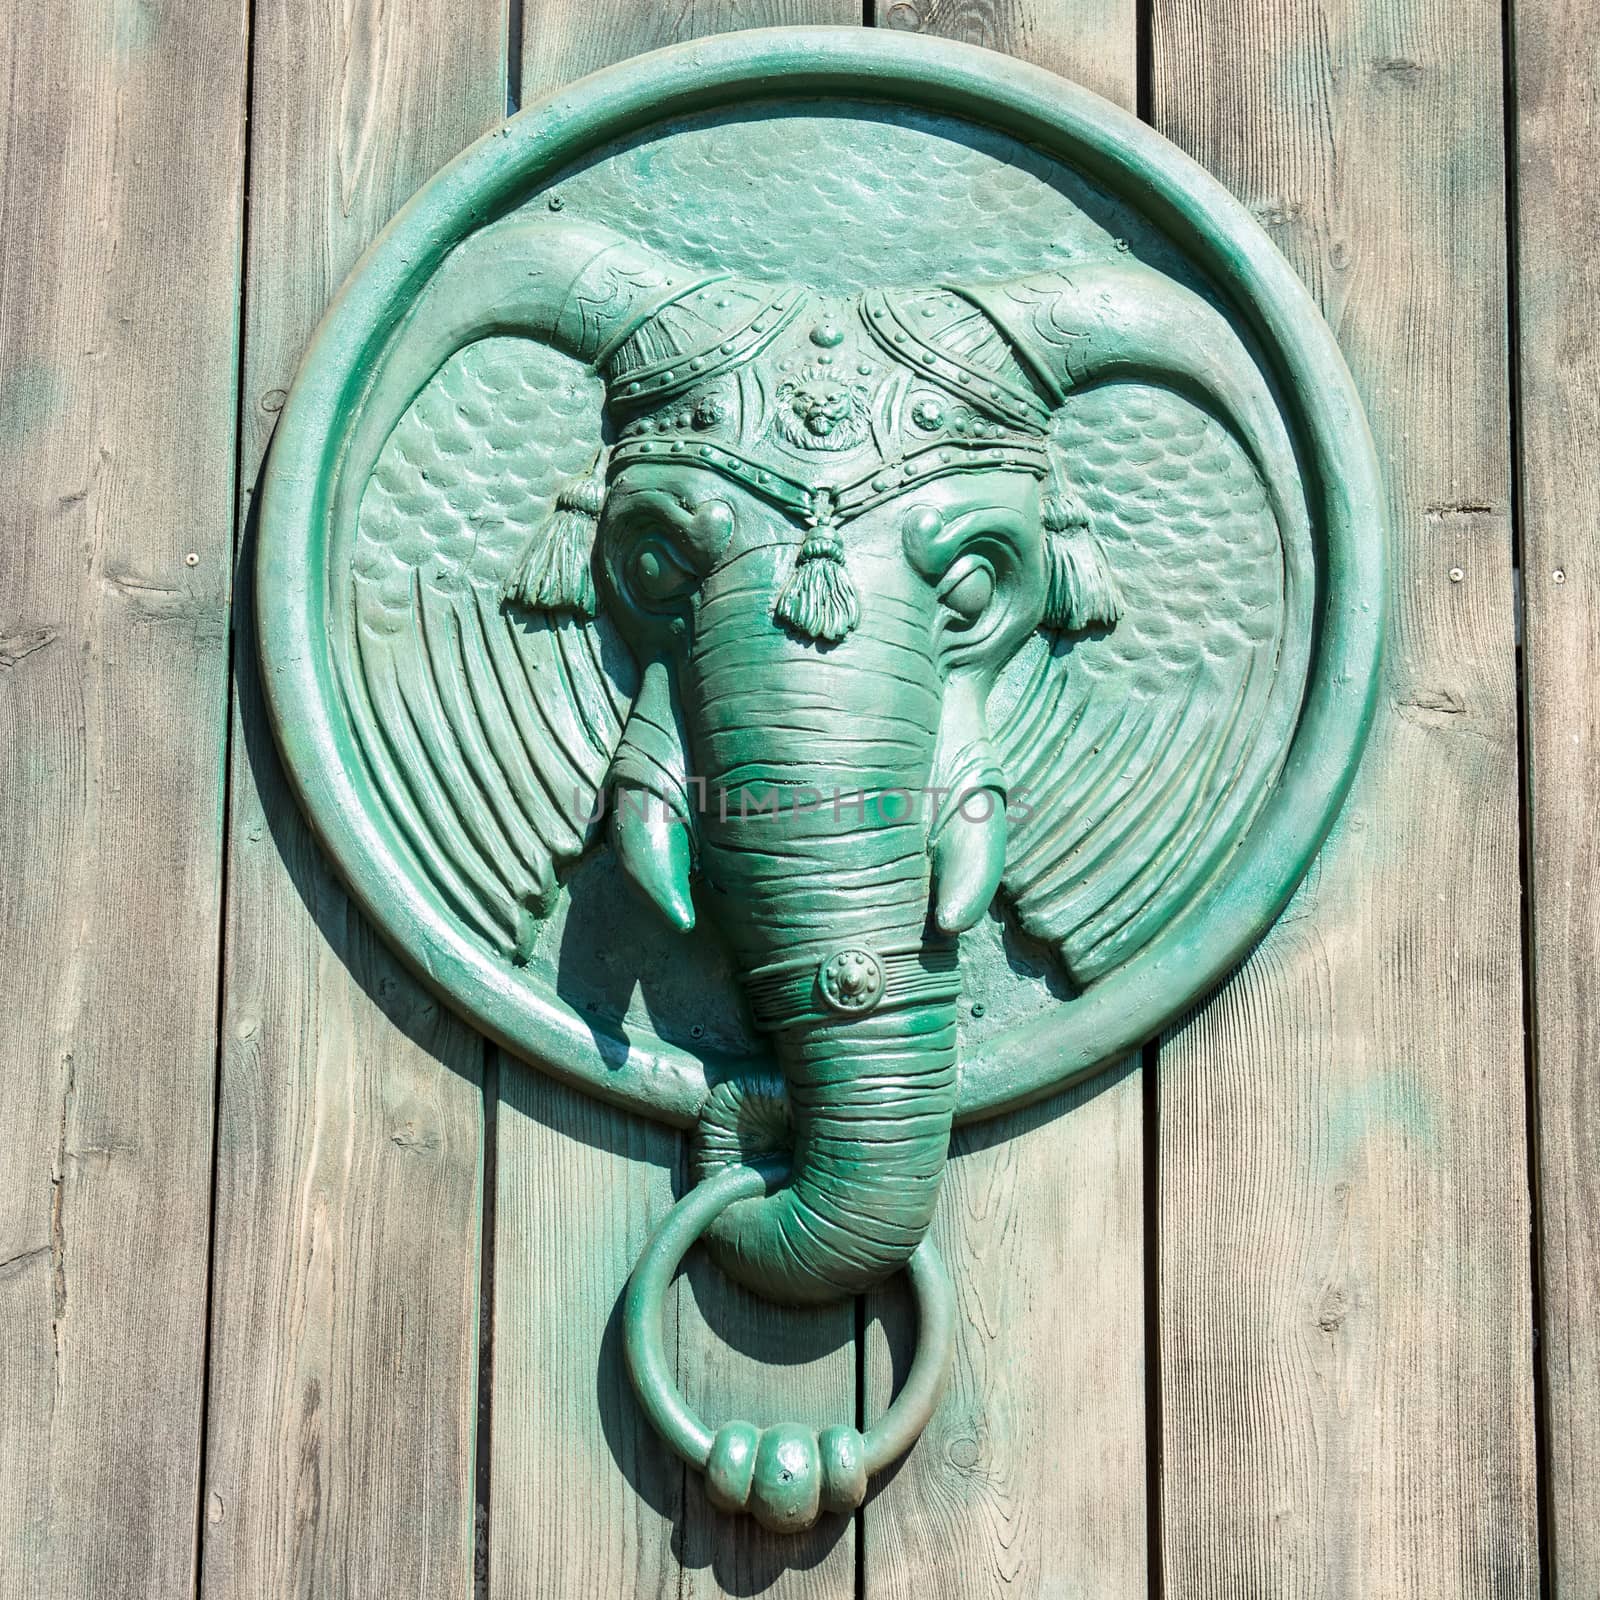 Antique door knocker shaped like elephant's head.